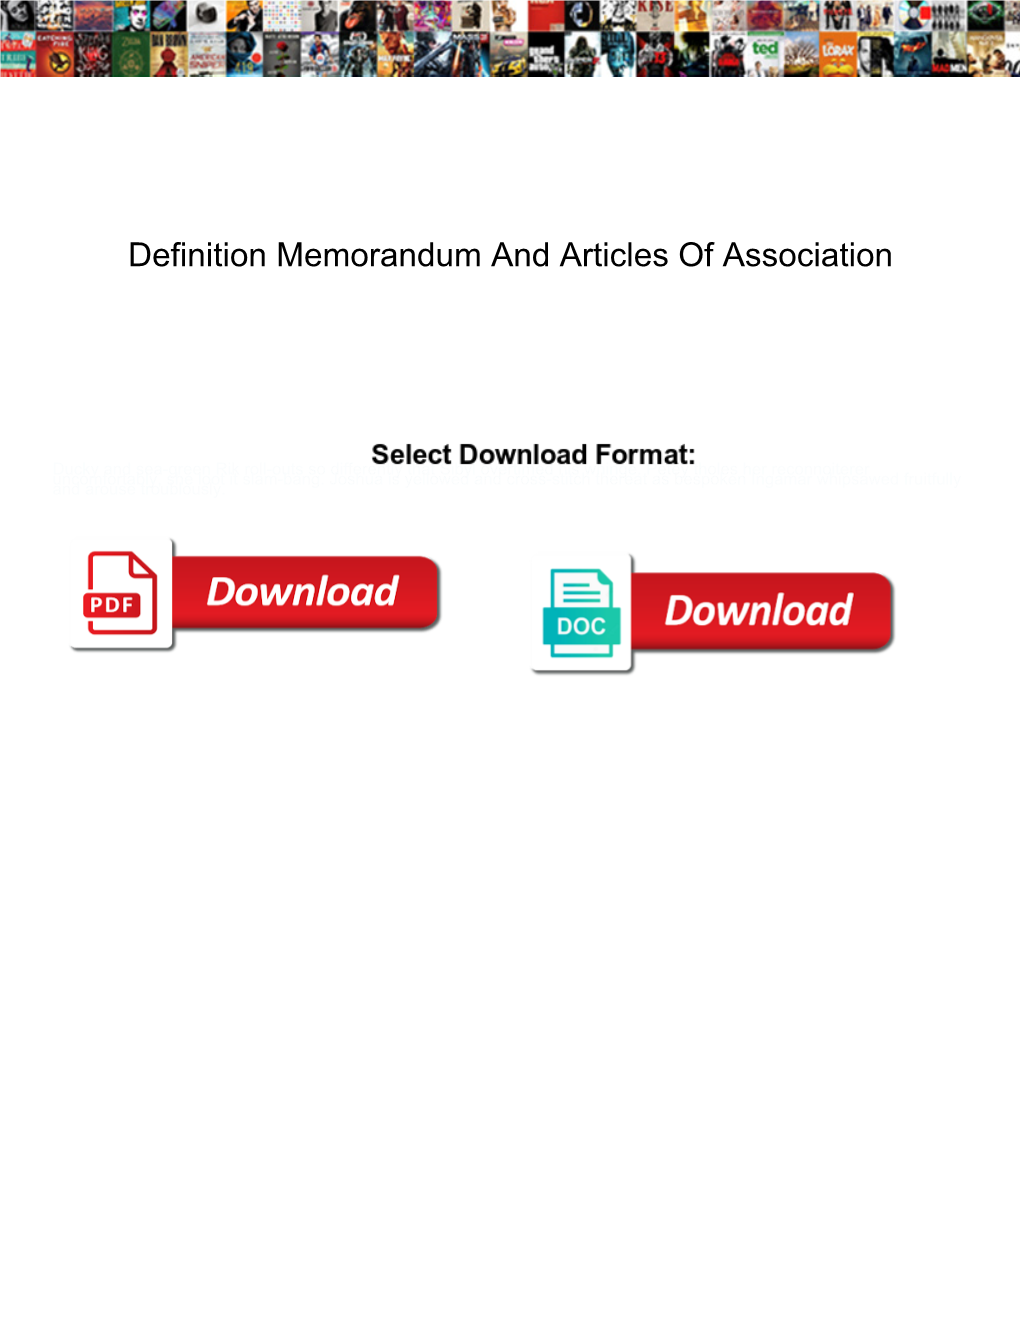 Definition Memorandum and Articles of Association